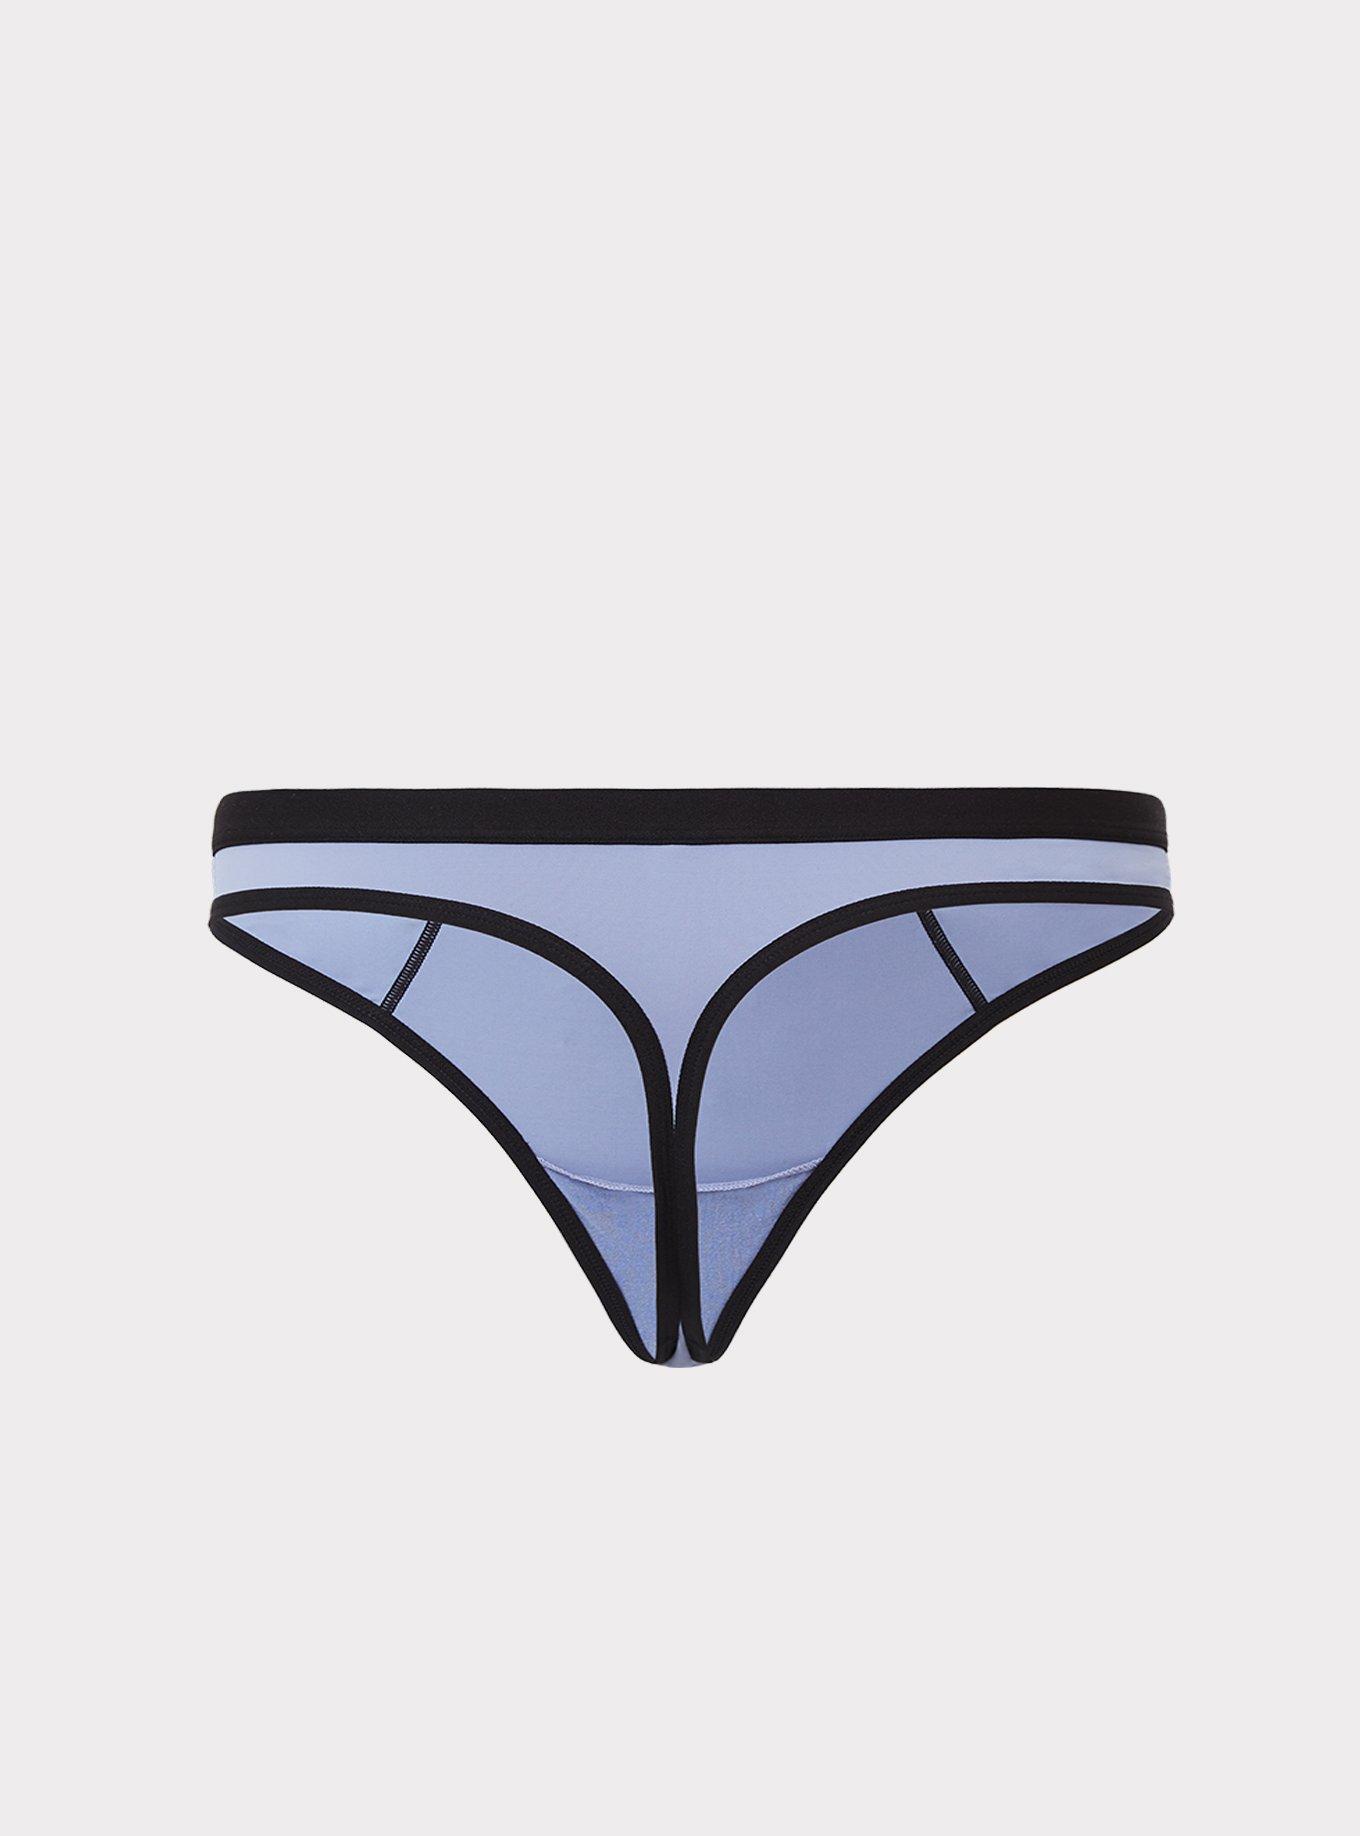 Plus Size - Tara Lynn - Microfiber Thong Panty - Torrid